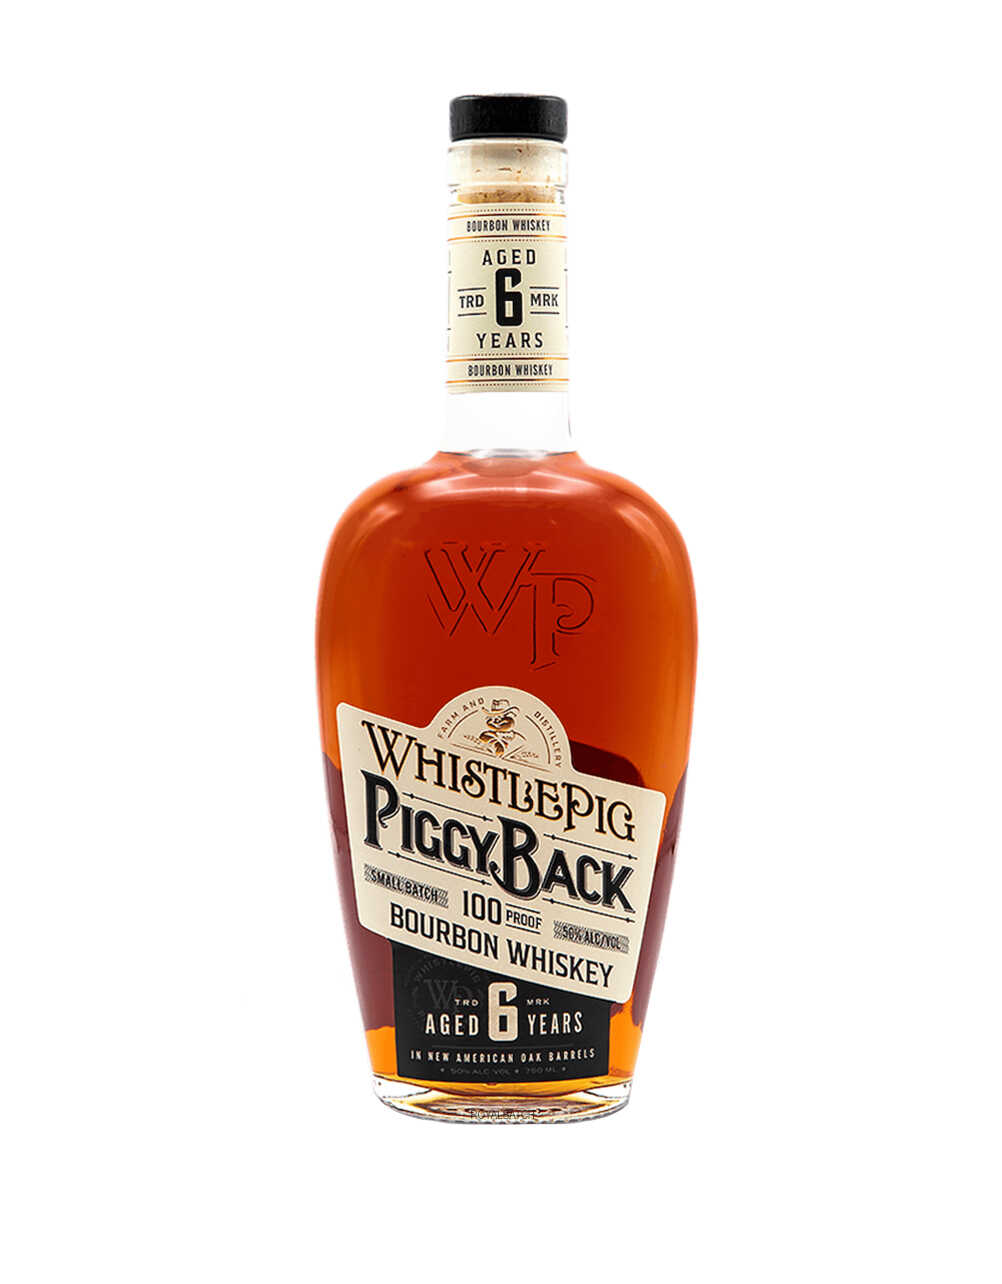 WhistlePig PiggyBack 6 Year Old Bourbon Whiskey